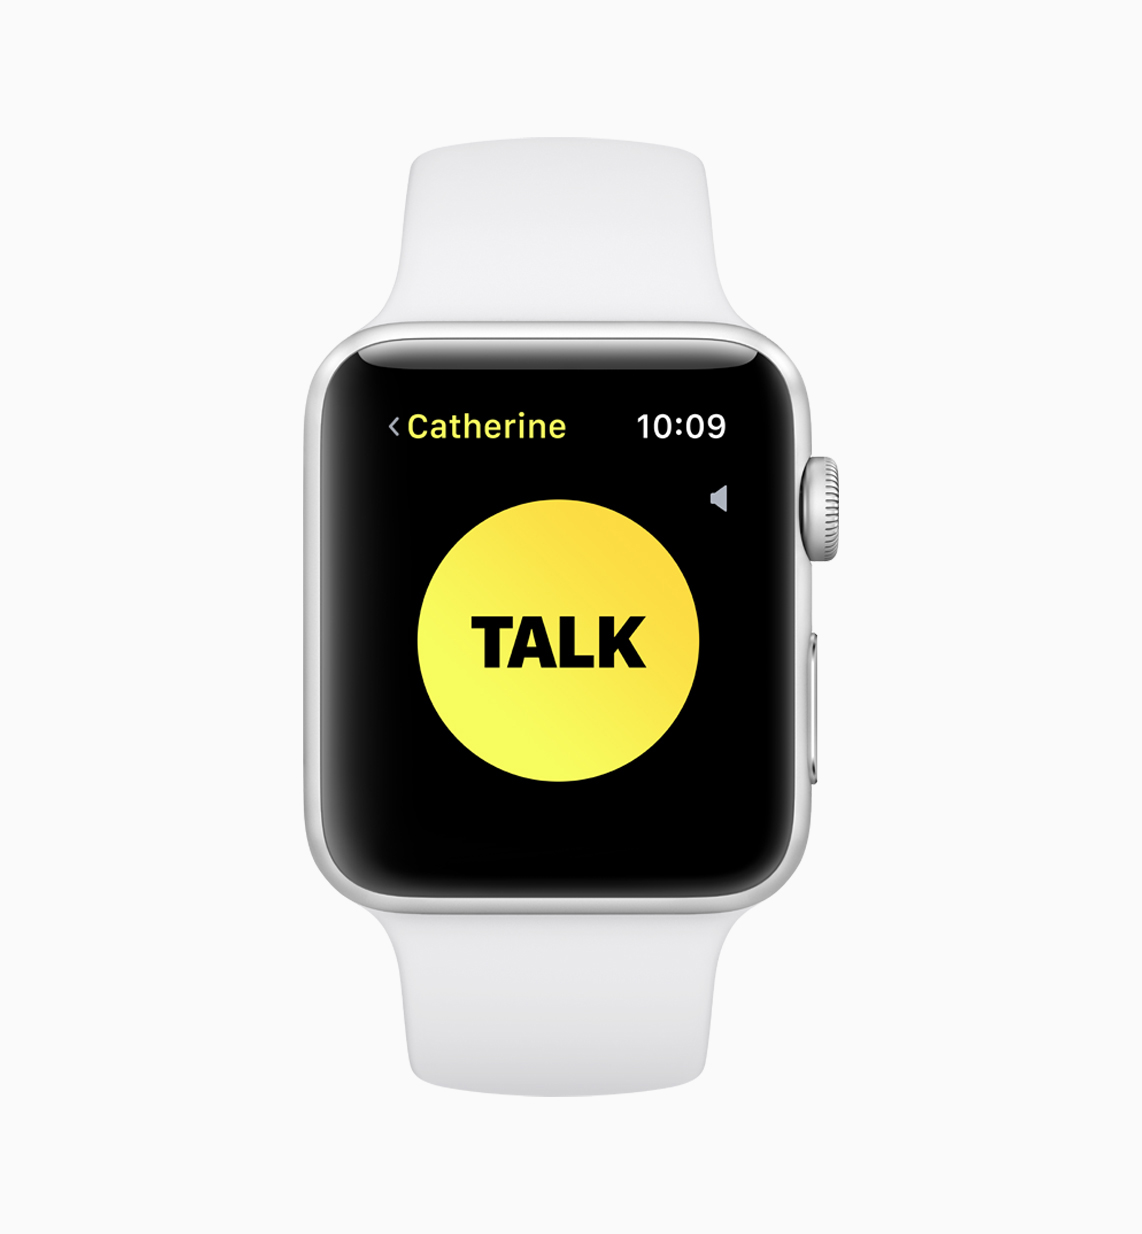 Apple Releases Updated watchOS 5 Beta - Fixes Watch Bricking Issue